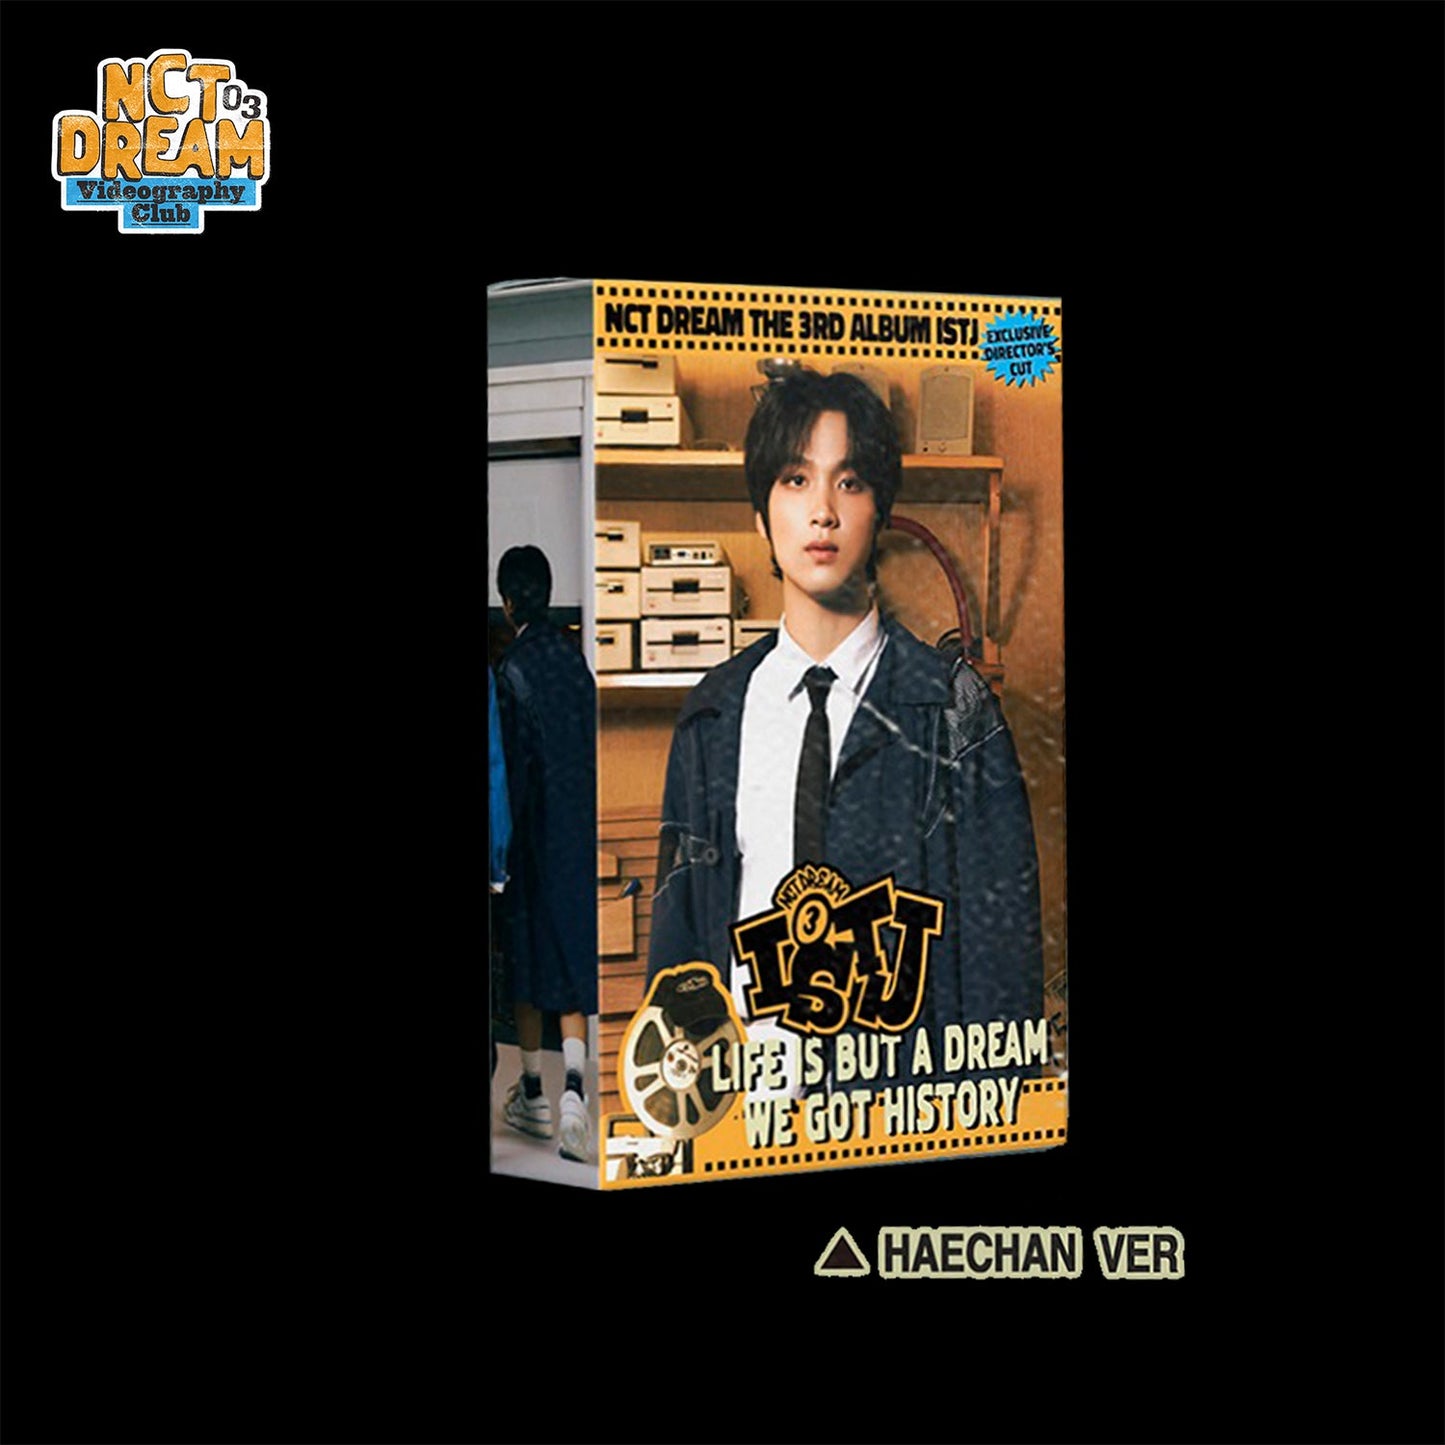 NCT DREAM 3RD ALBUM 'ISTJ' (7DREAM QR) HAECHAN VERSION COVER